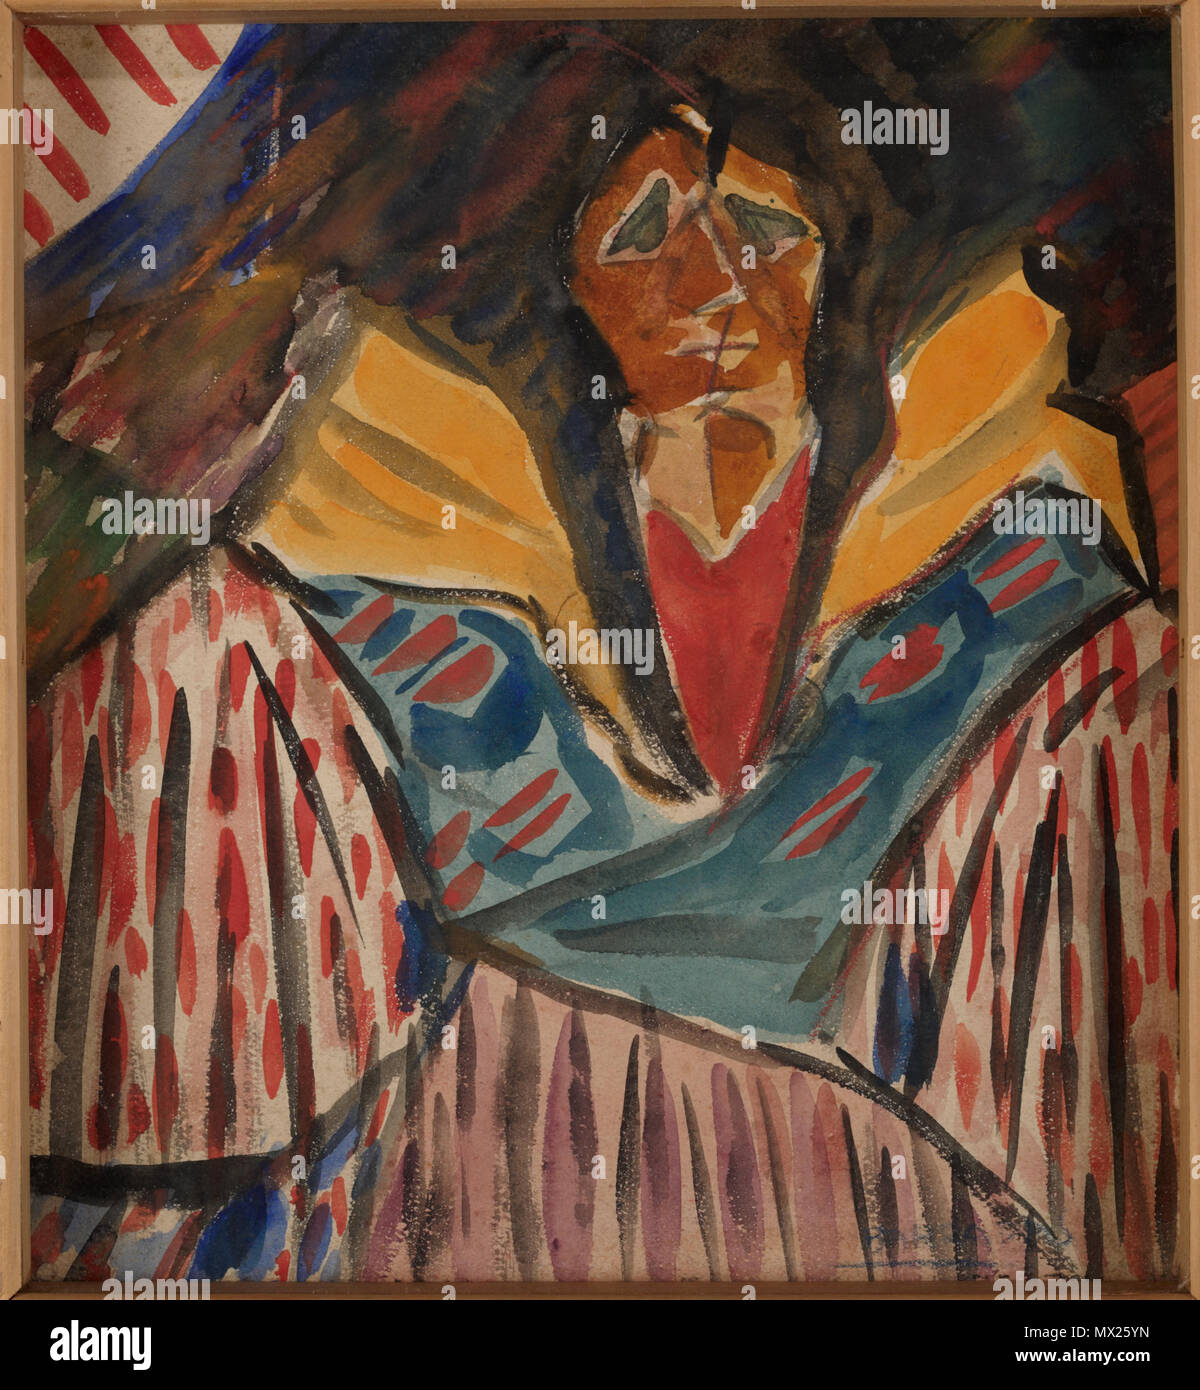 Español : Obra 'Gitana' del Pintor uruguayo Rafael Barradas (1890-1929)  Acuarela sobre papel de 34 cm de haut x 31 cm de ancho, realizado hacia  1917. La obra de Fotografía tomada